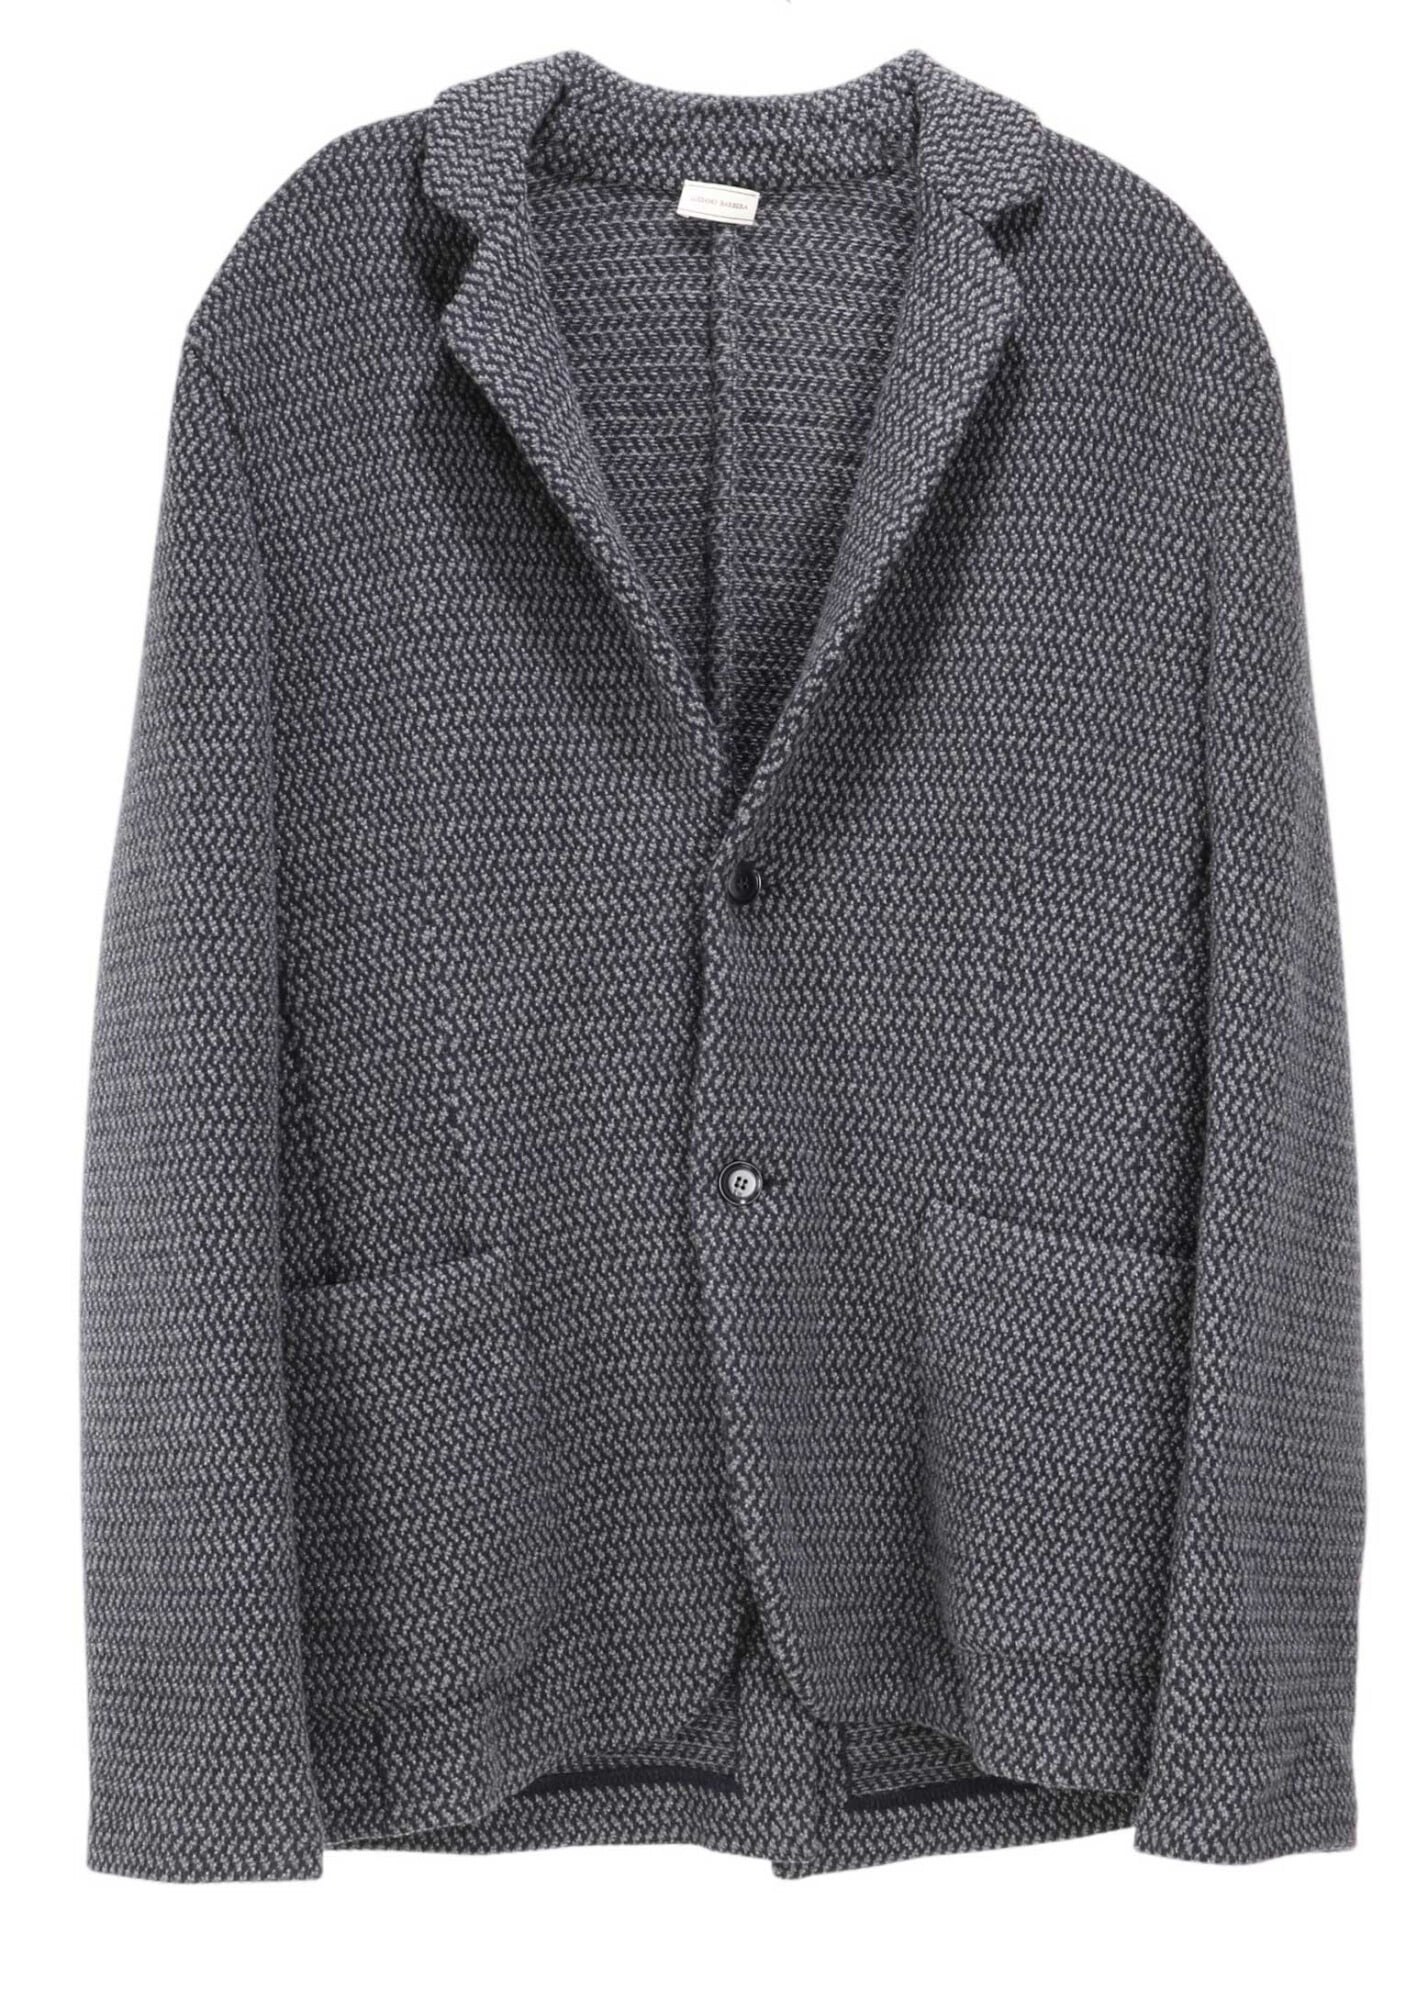 Luciano Barbera Men's Navy / Grey Knitted Sweater Sport Coats & Blazer ...